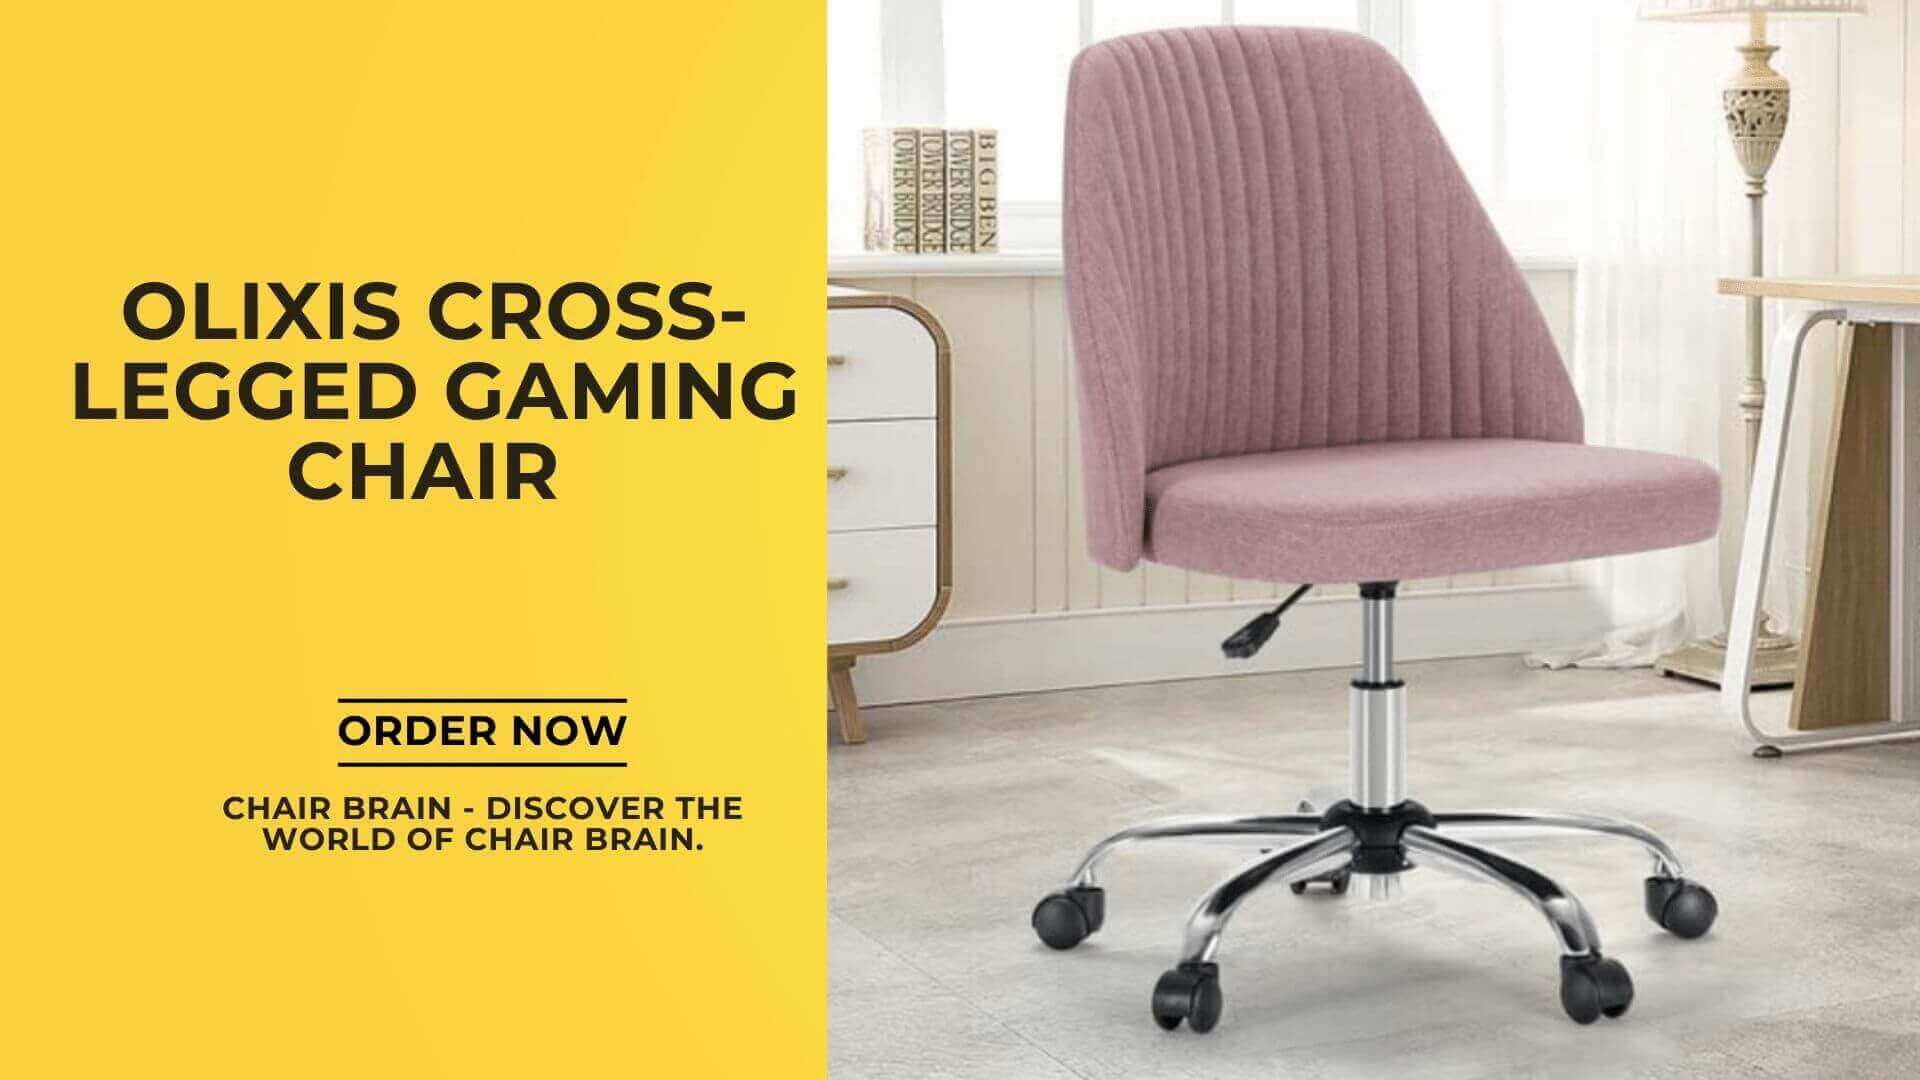 OLIXIS Cross-Legged Gaming Chair